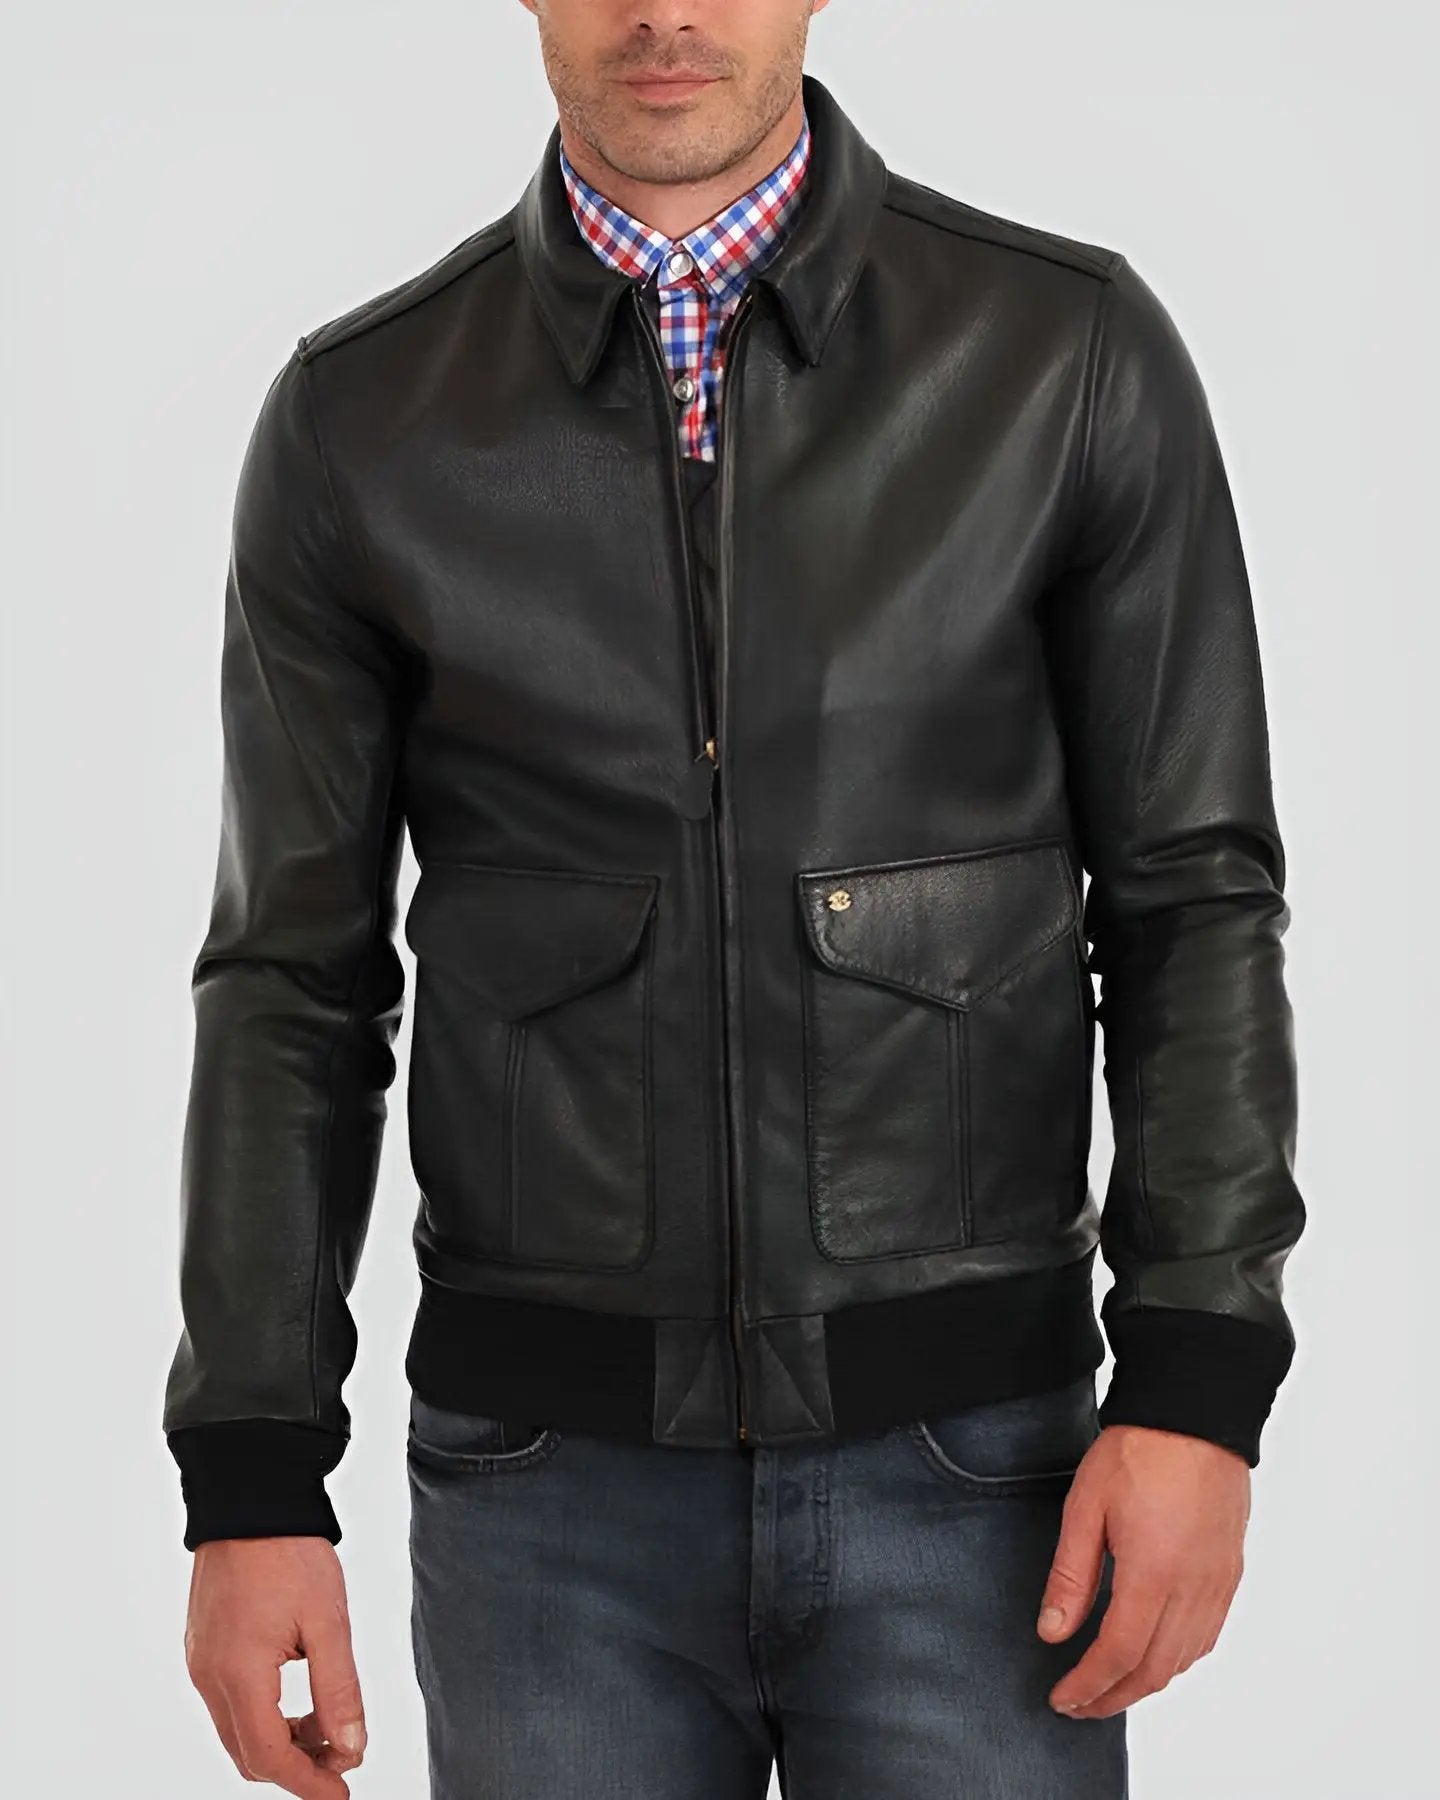 Jacket NYC Leather Black Mens - Jackets Leather Bomber Kyros